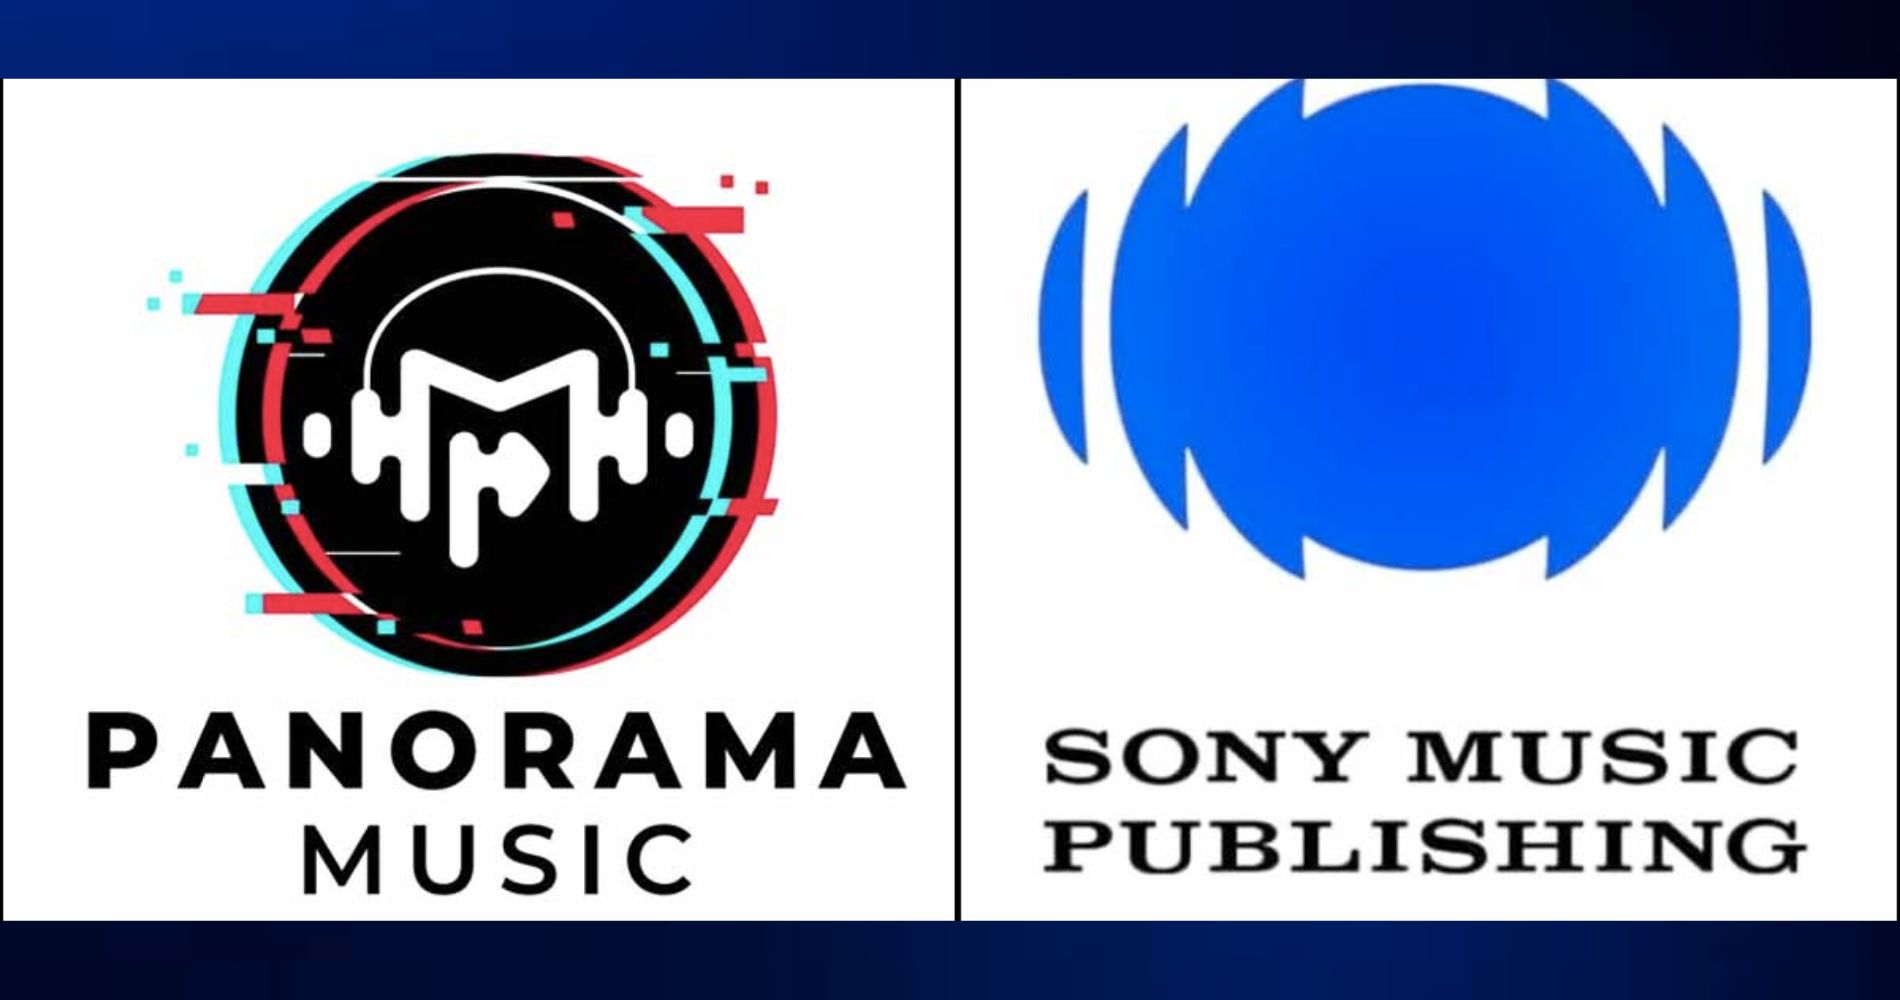 Panorama Music And Sony Music Publishing Launch Strategic Partnership To